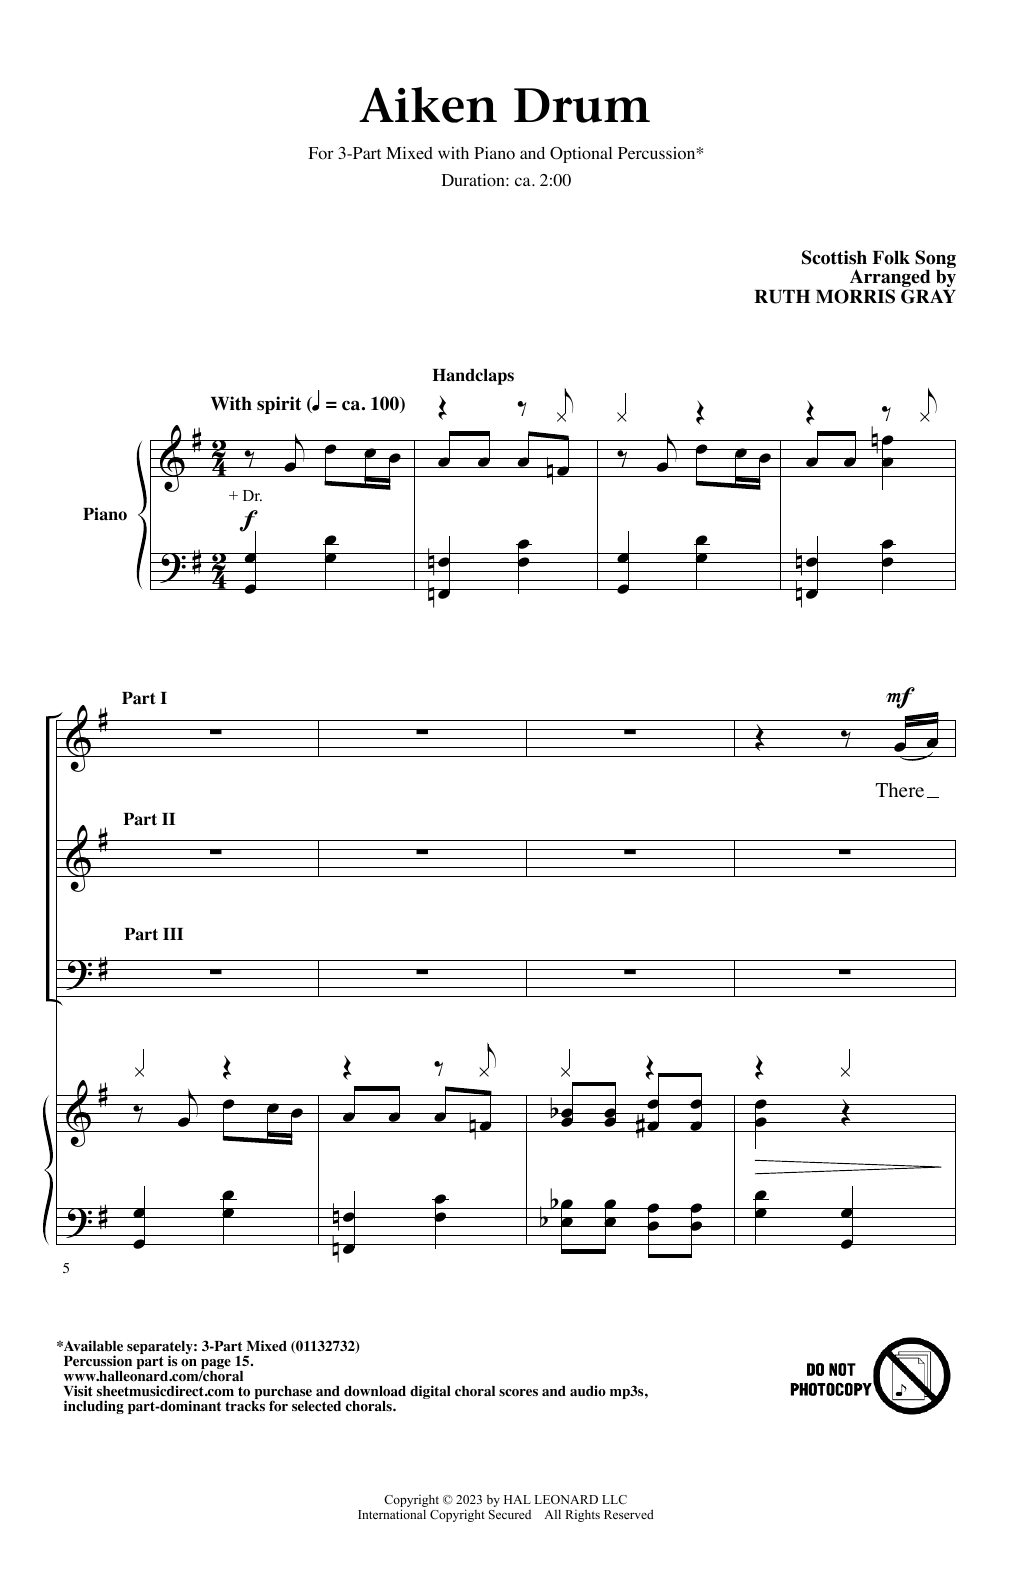 Scottish Folk Song Aiken Drum (arr. Ruth Morris Gray) Sheet Music Notes & Chords for 3-Part Mixed Choir - Download or Print PDF